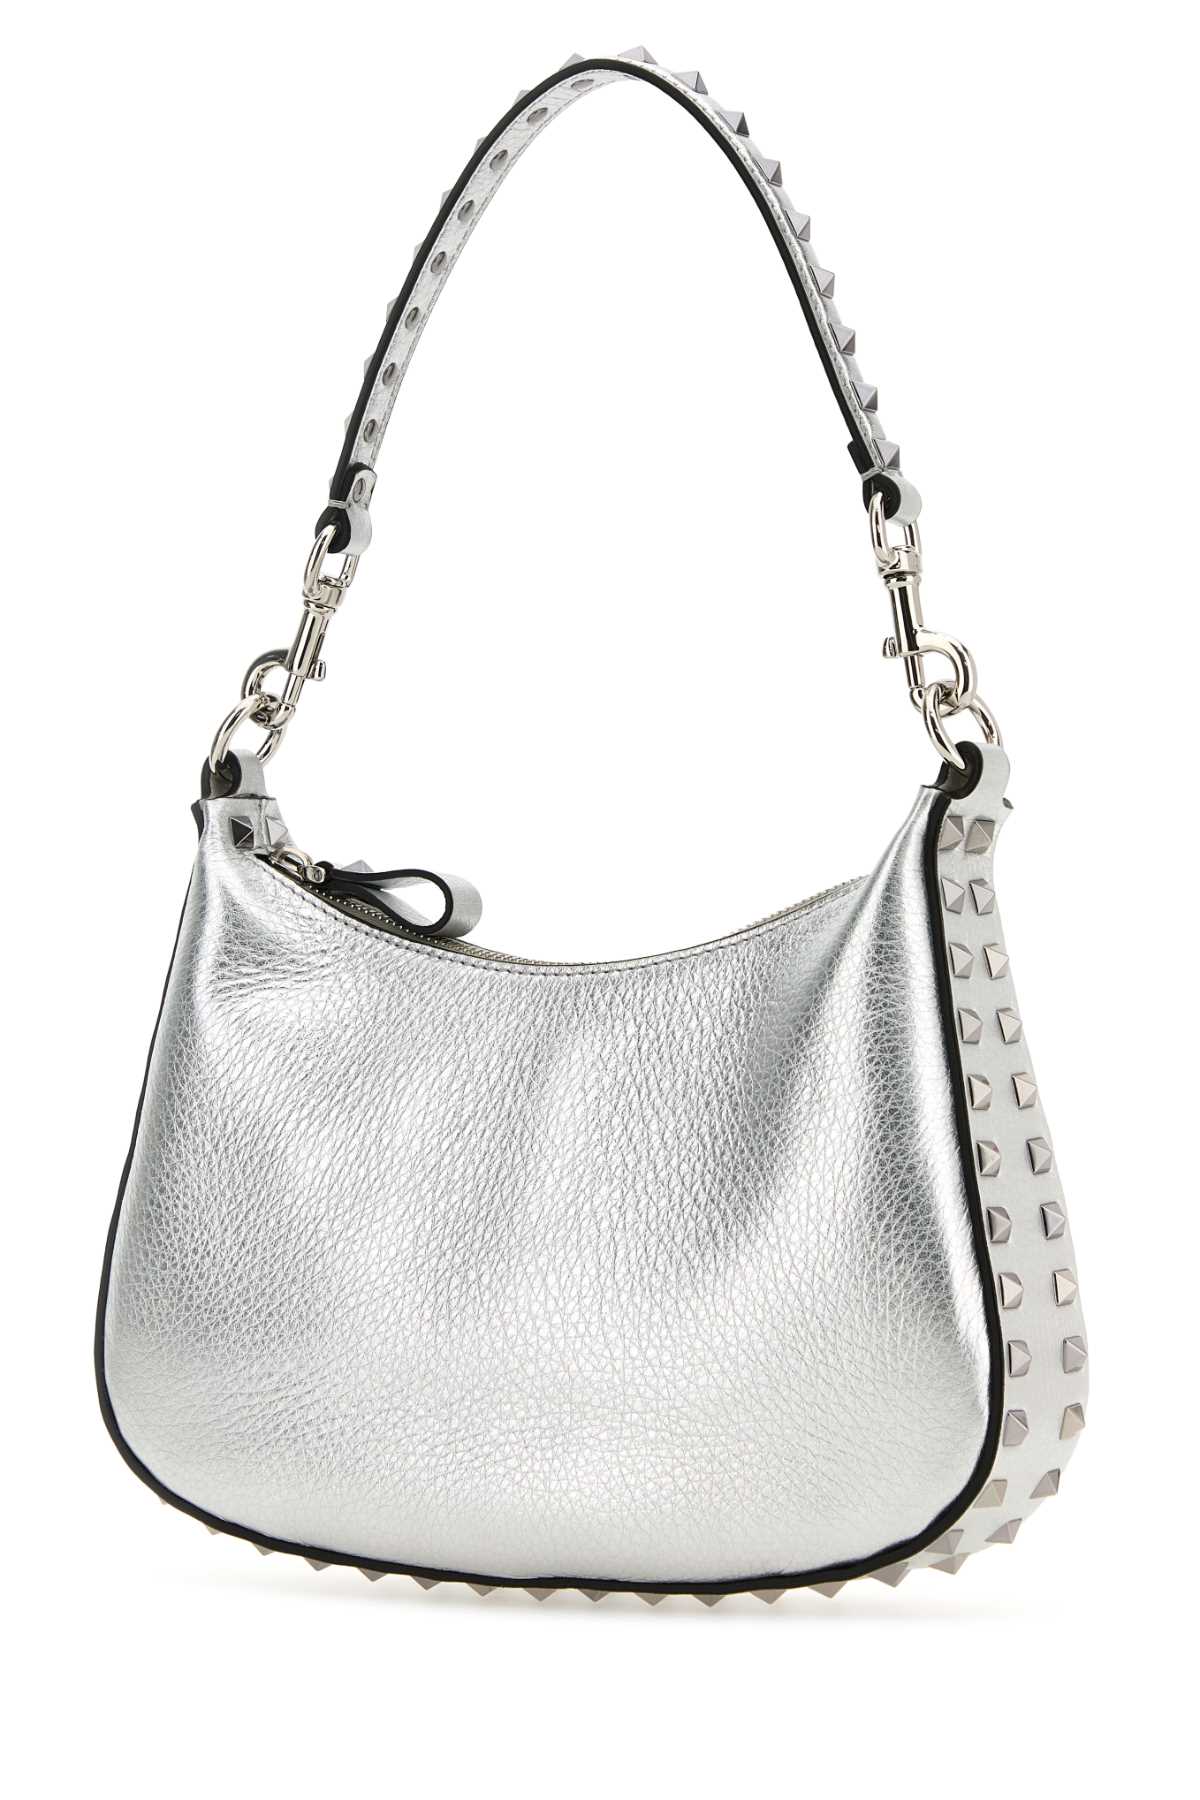 Valentino Garavani Silver Leather Rockstud Handbag In Metallic